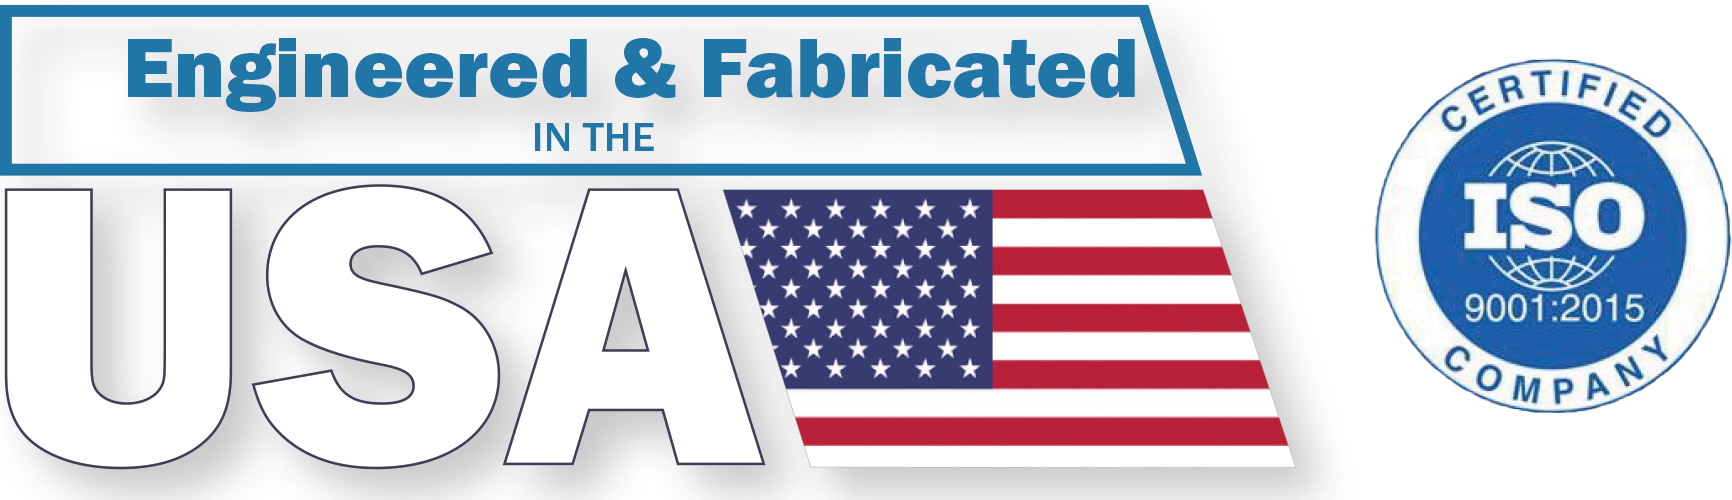 USA flag and iso logo graphic